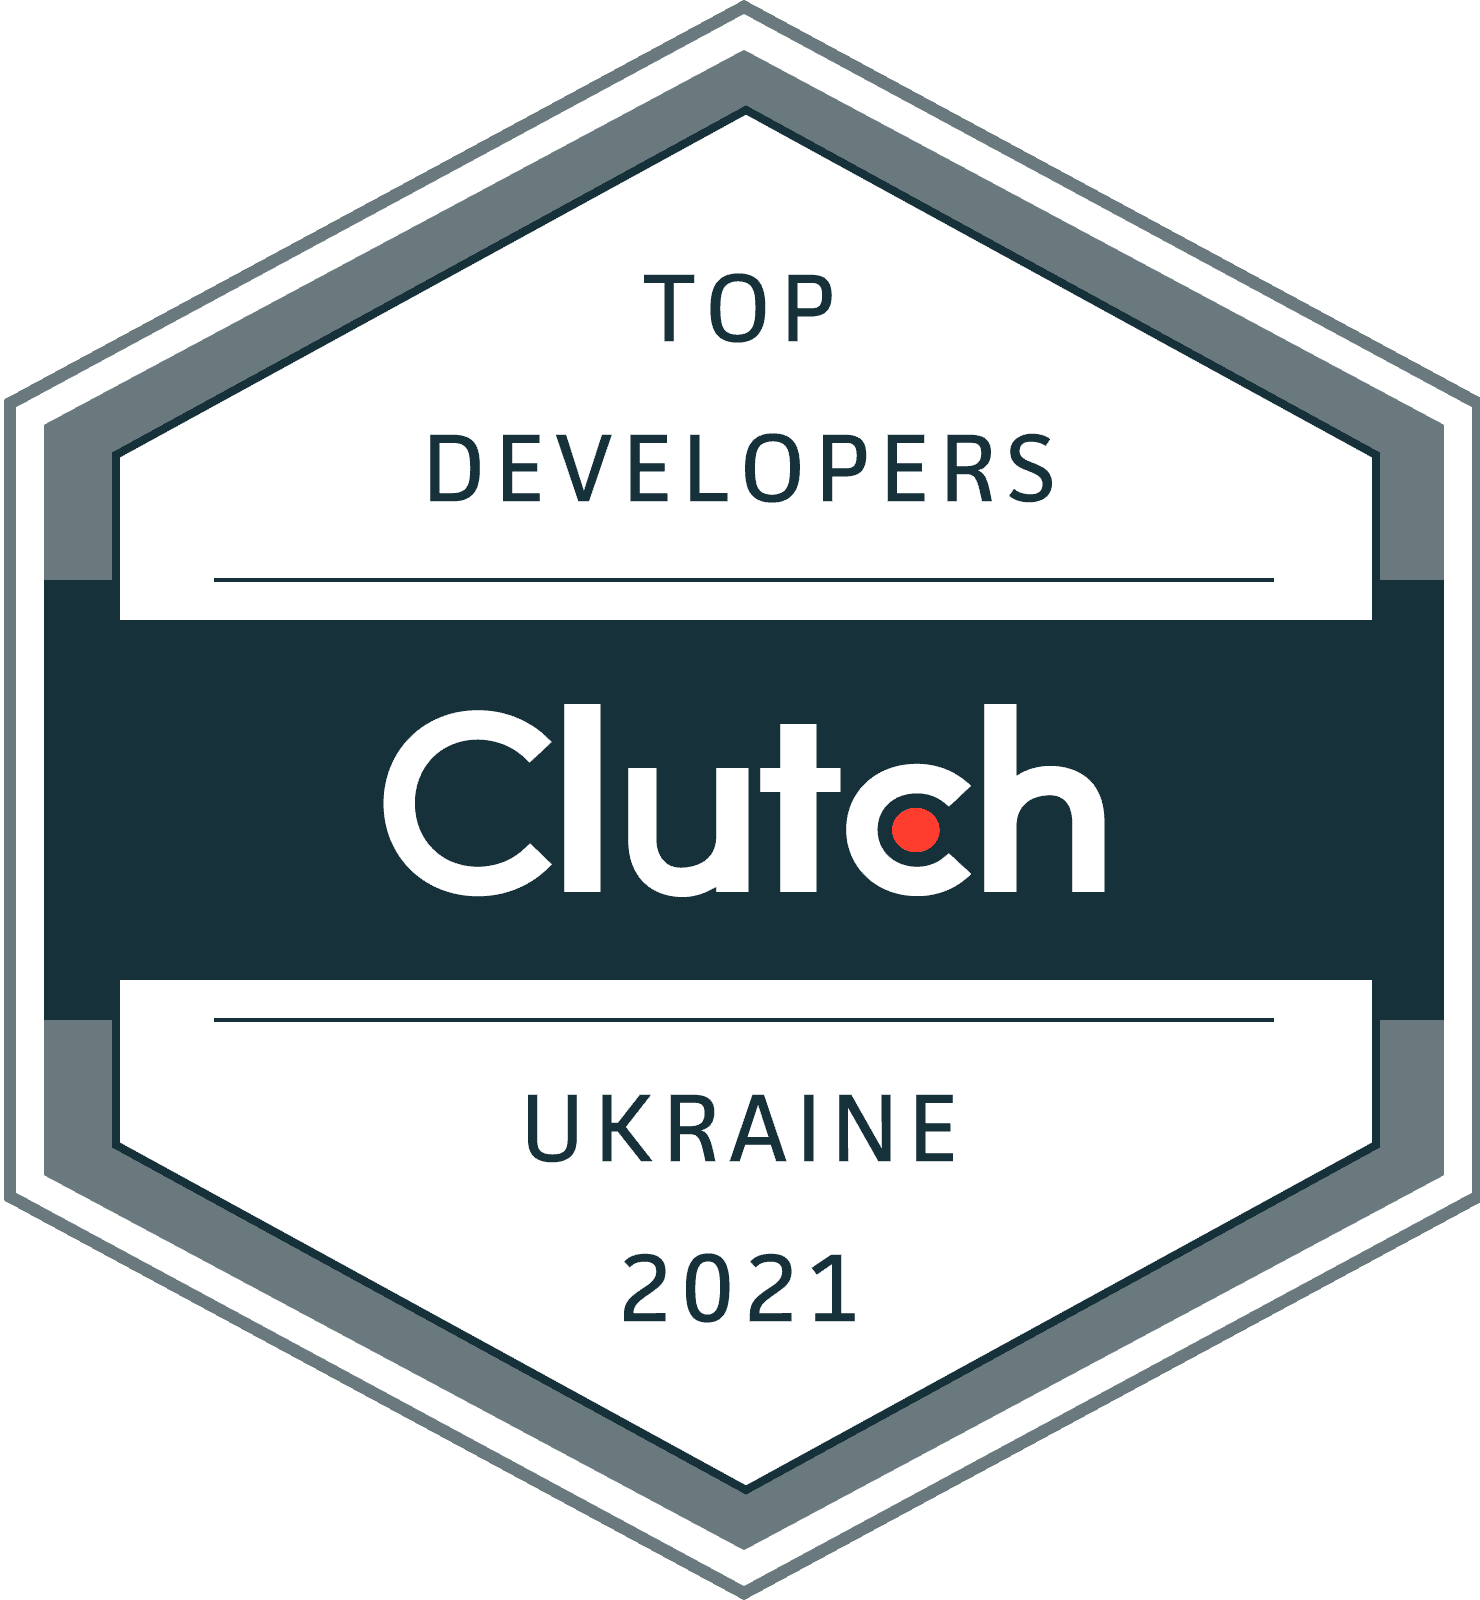 Top Developers in Ukraine 2021 by Clutch